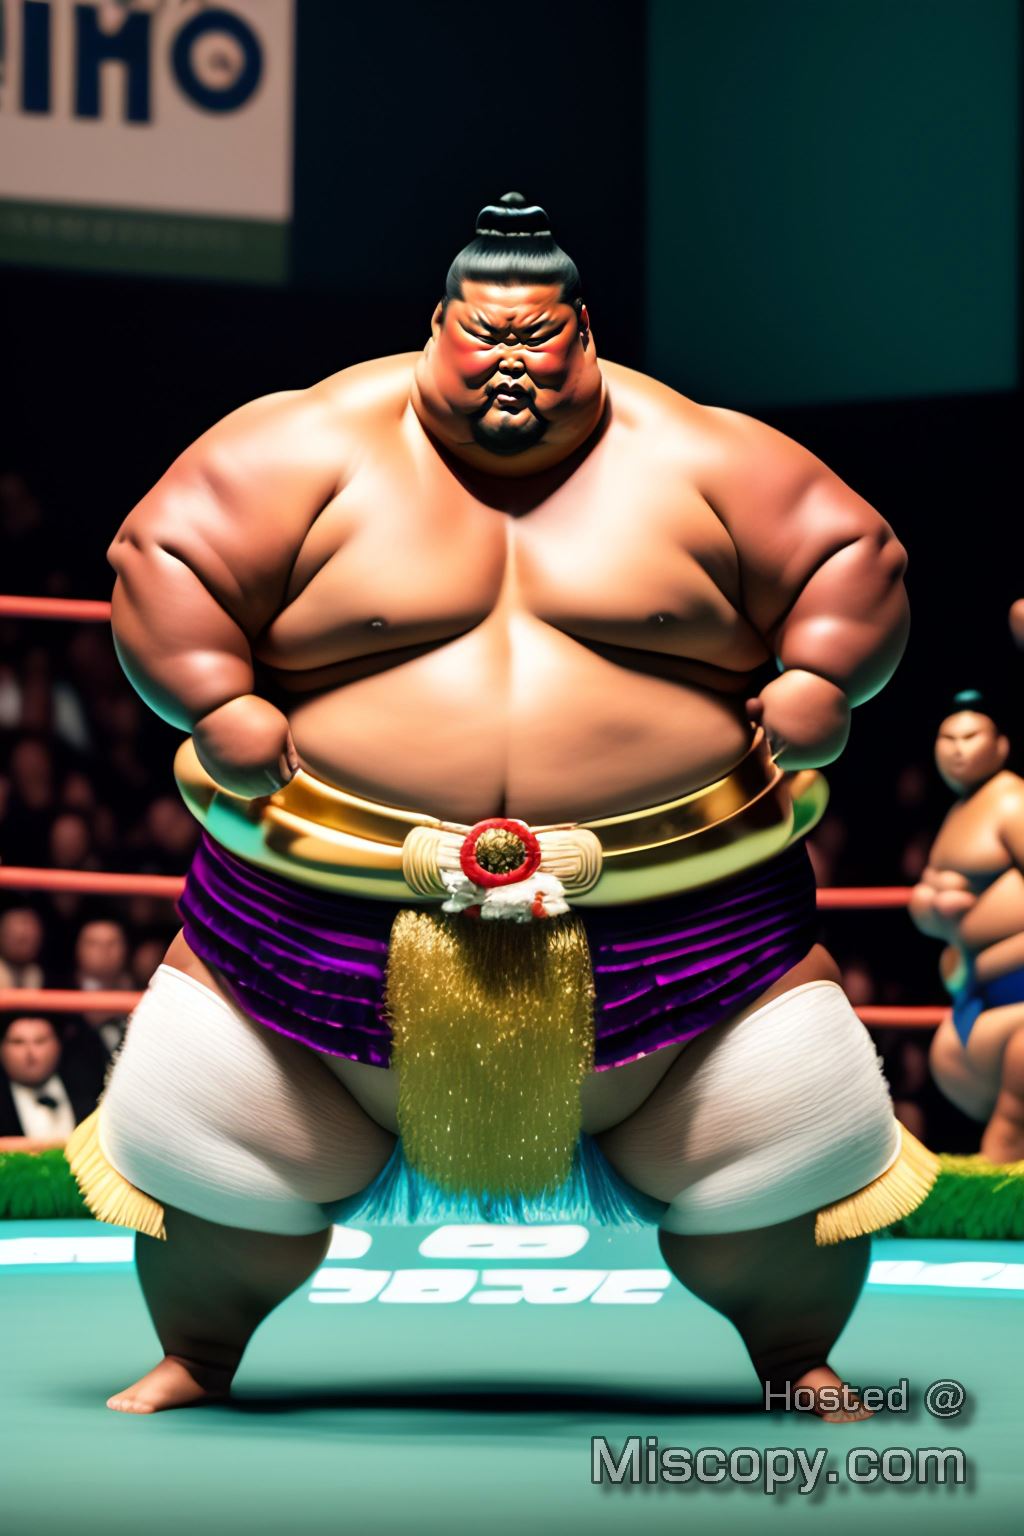 Yaocho: The Dark Side of Sumo Wrestling